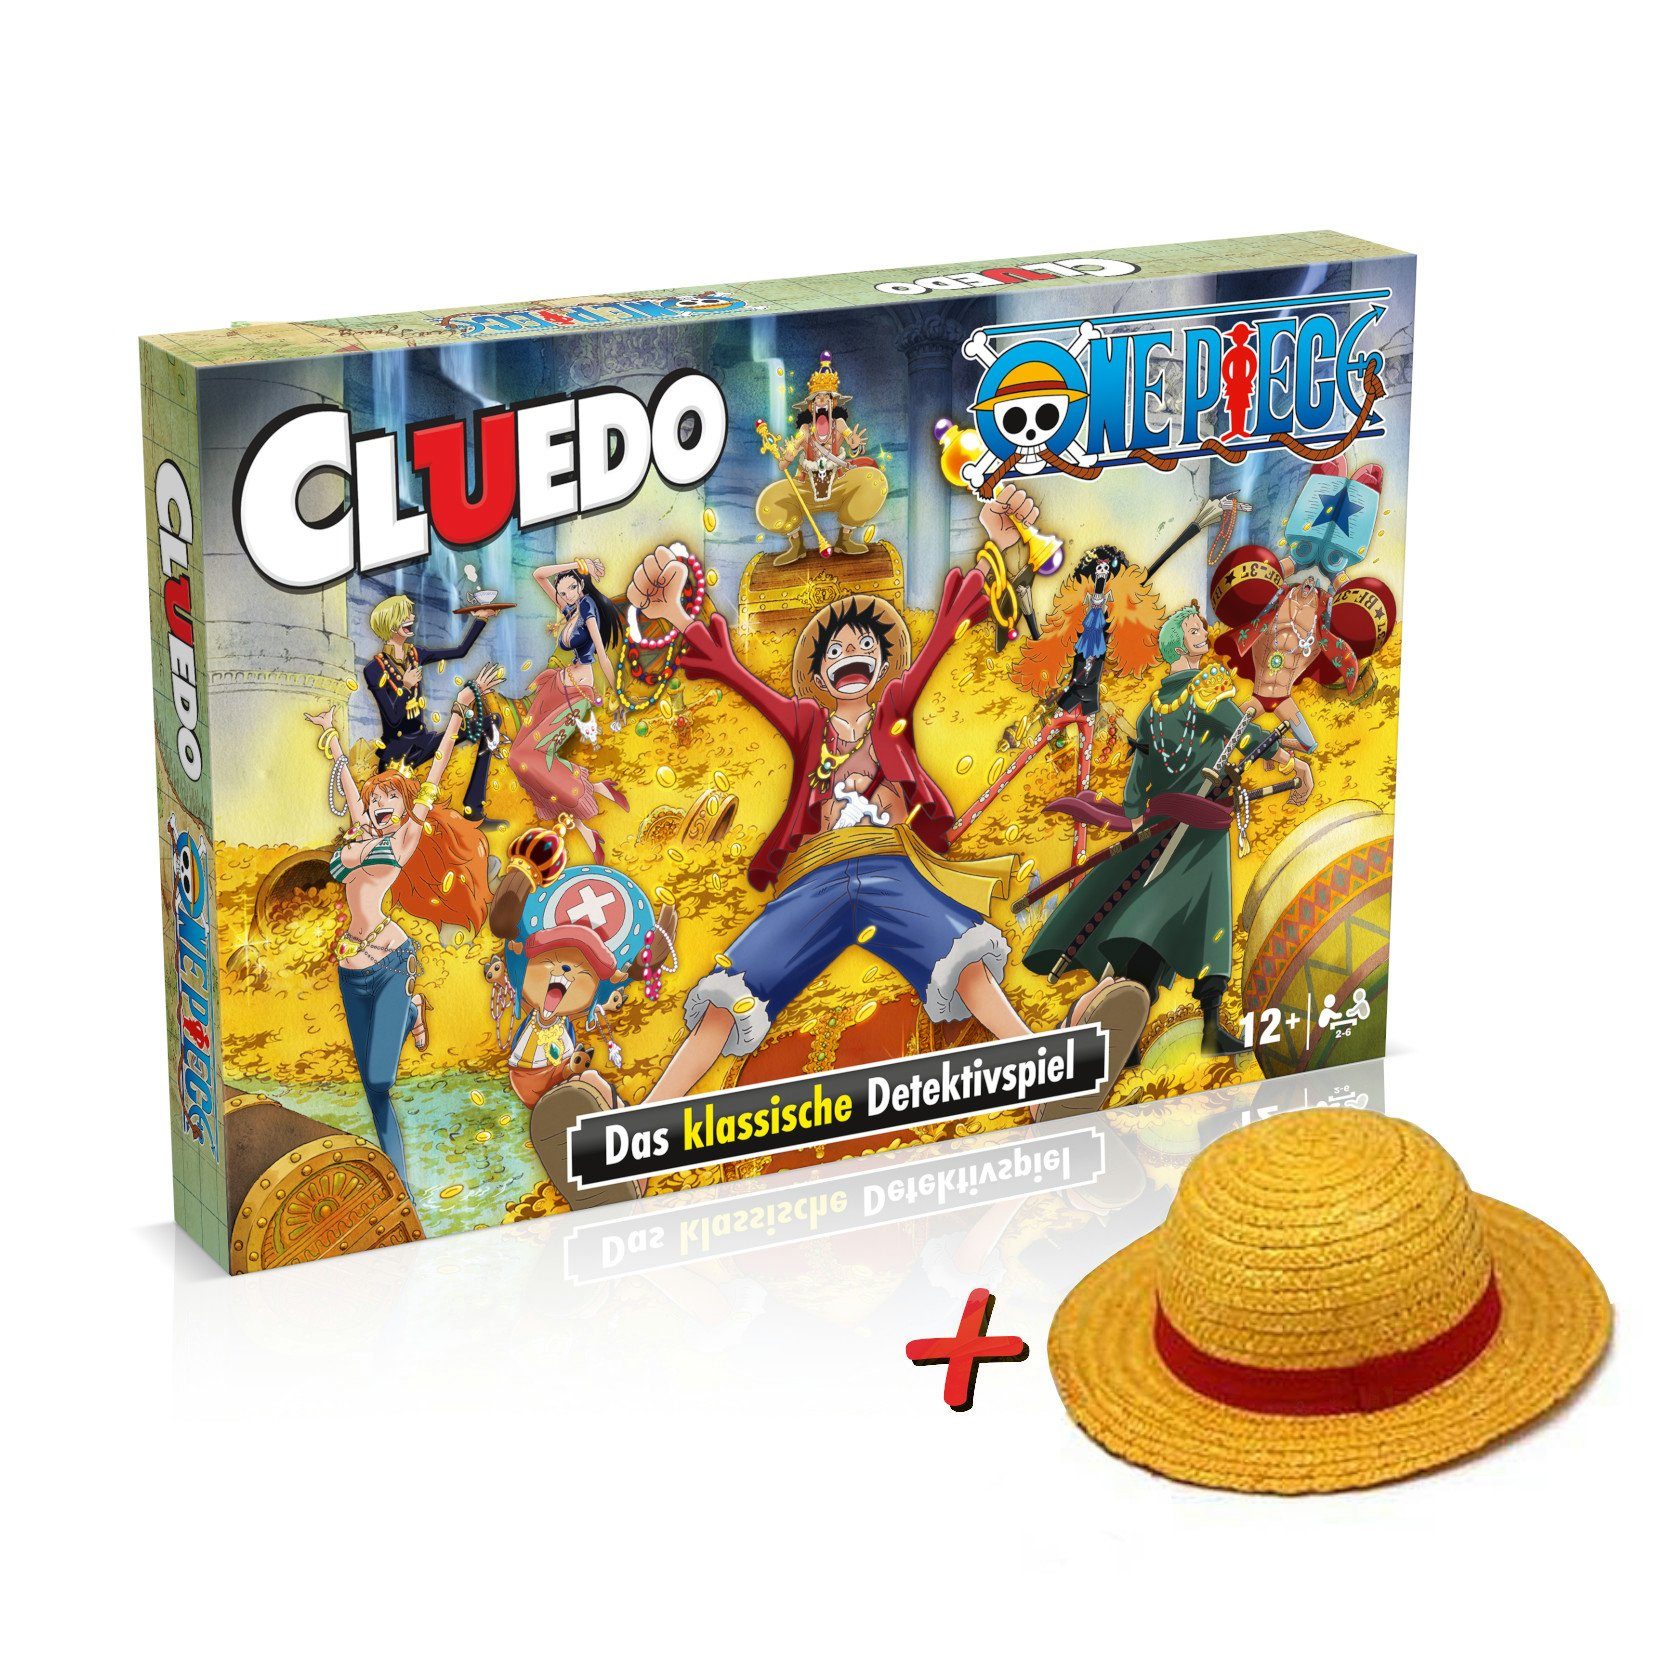 Cluedo Moves - Piece inkl. Ruffy Spiel, Winning Strohhut Brettspiel One